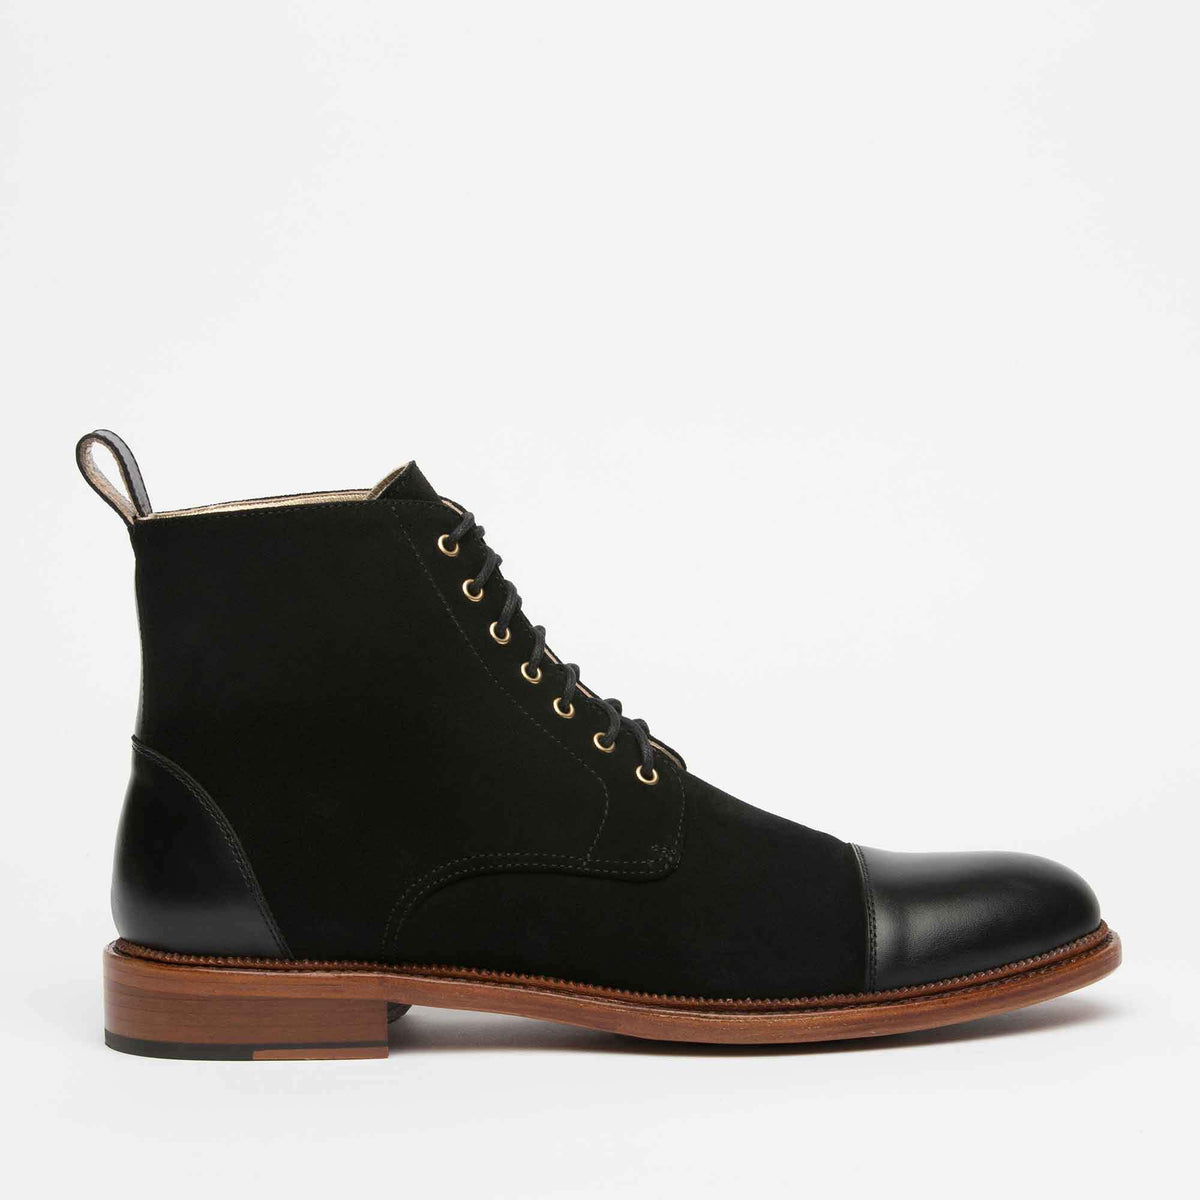 Shop our Men's Leather Boots, Dress Shoes & Sneakers | TAFT